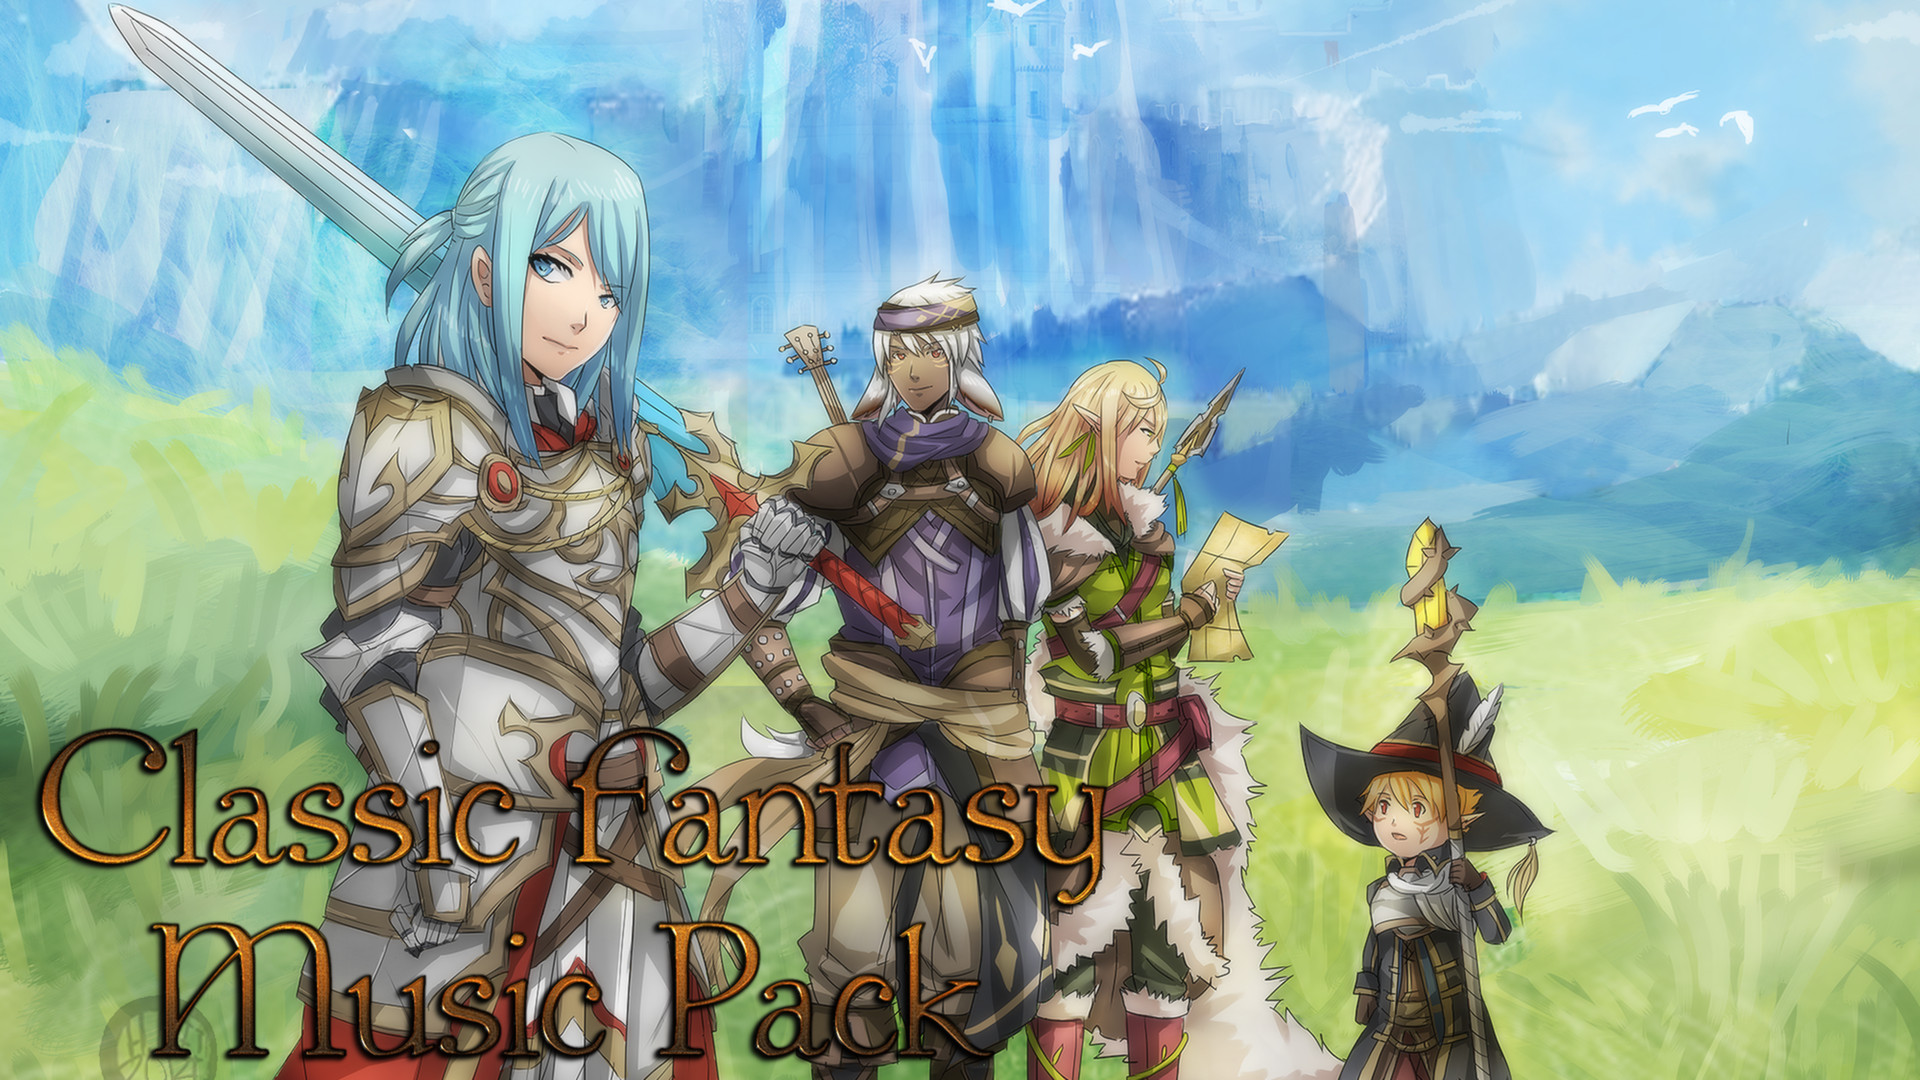 [$ 2.25] RPG Maker VX Ace - Classic Fantasy Music Pack DLC Steam CD Key